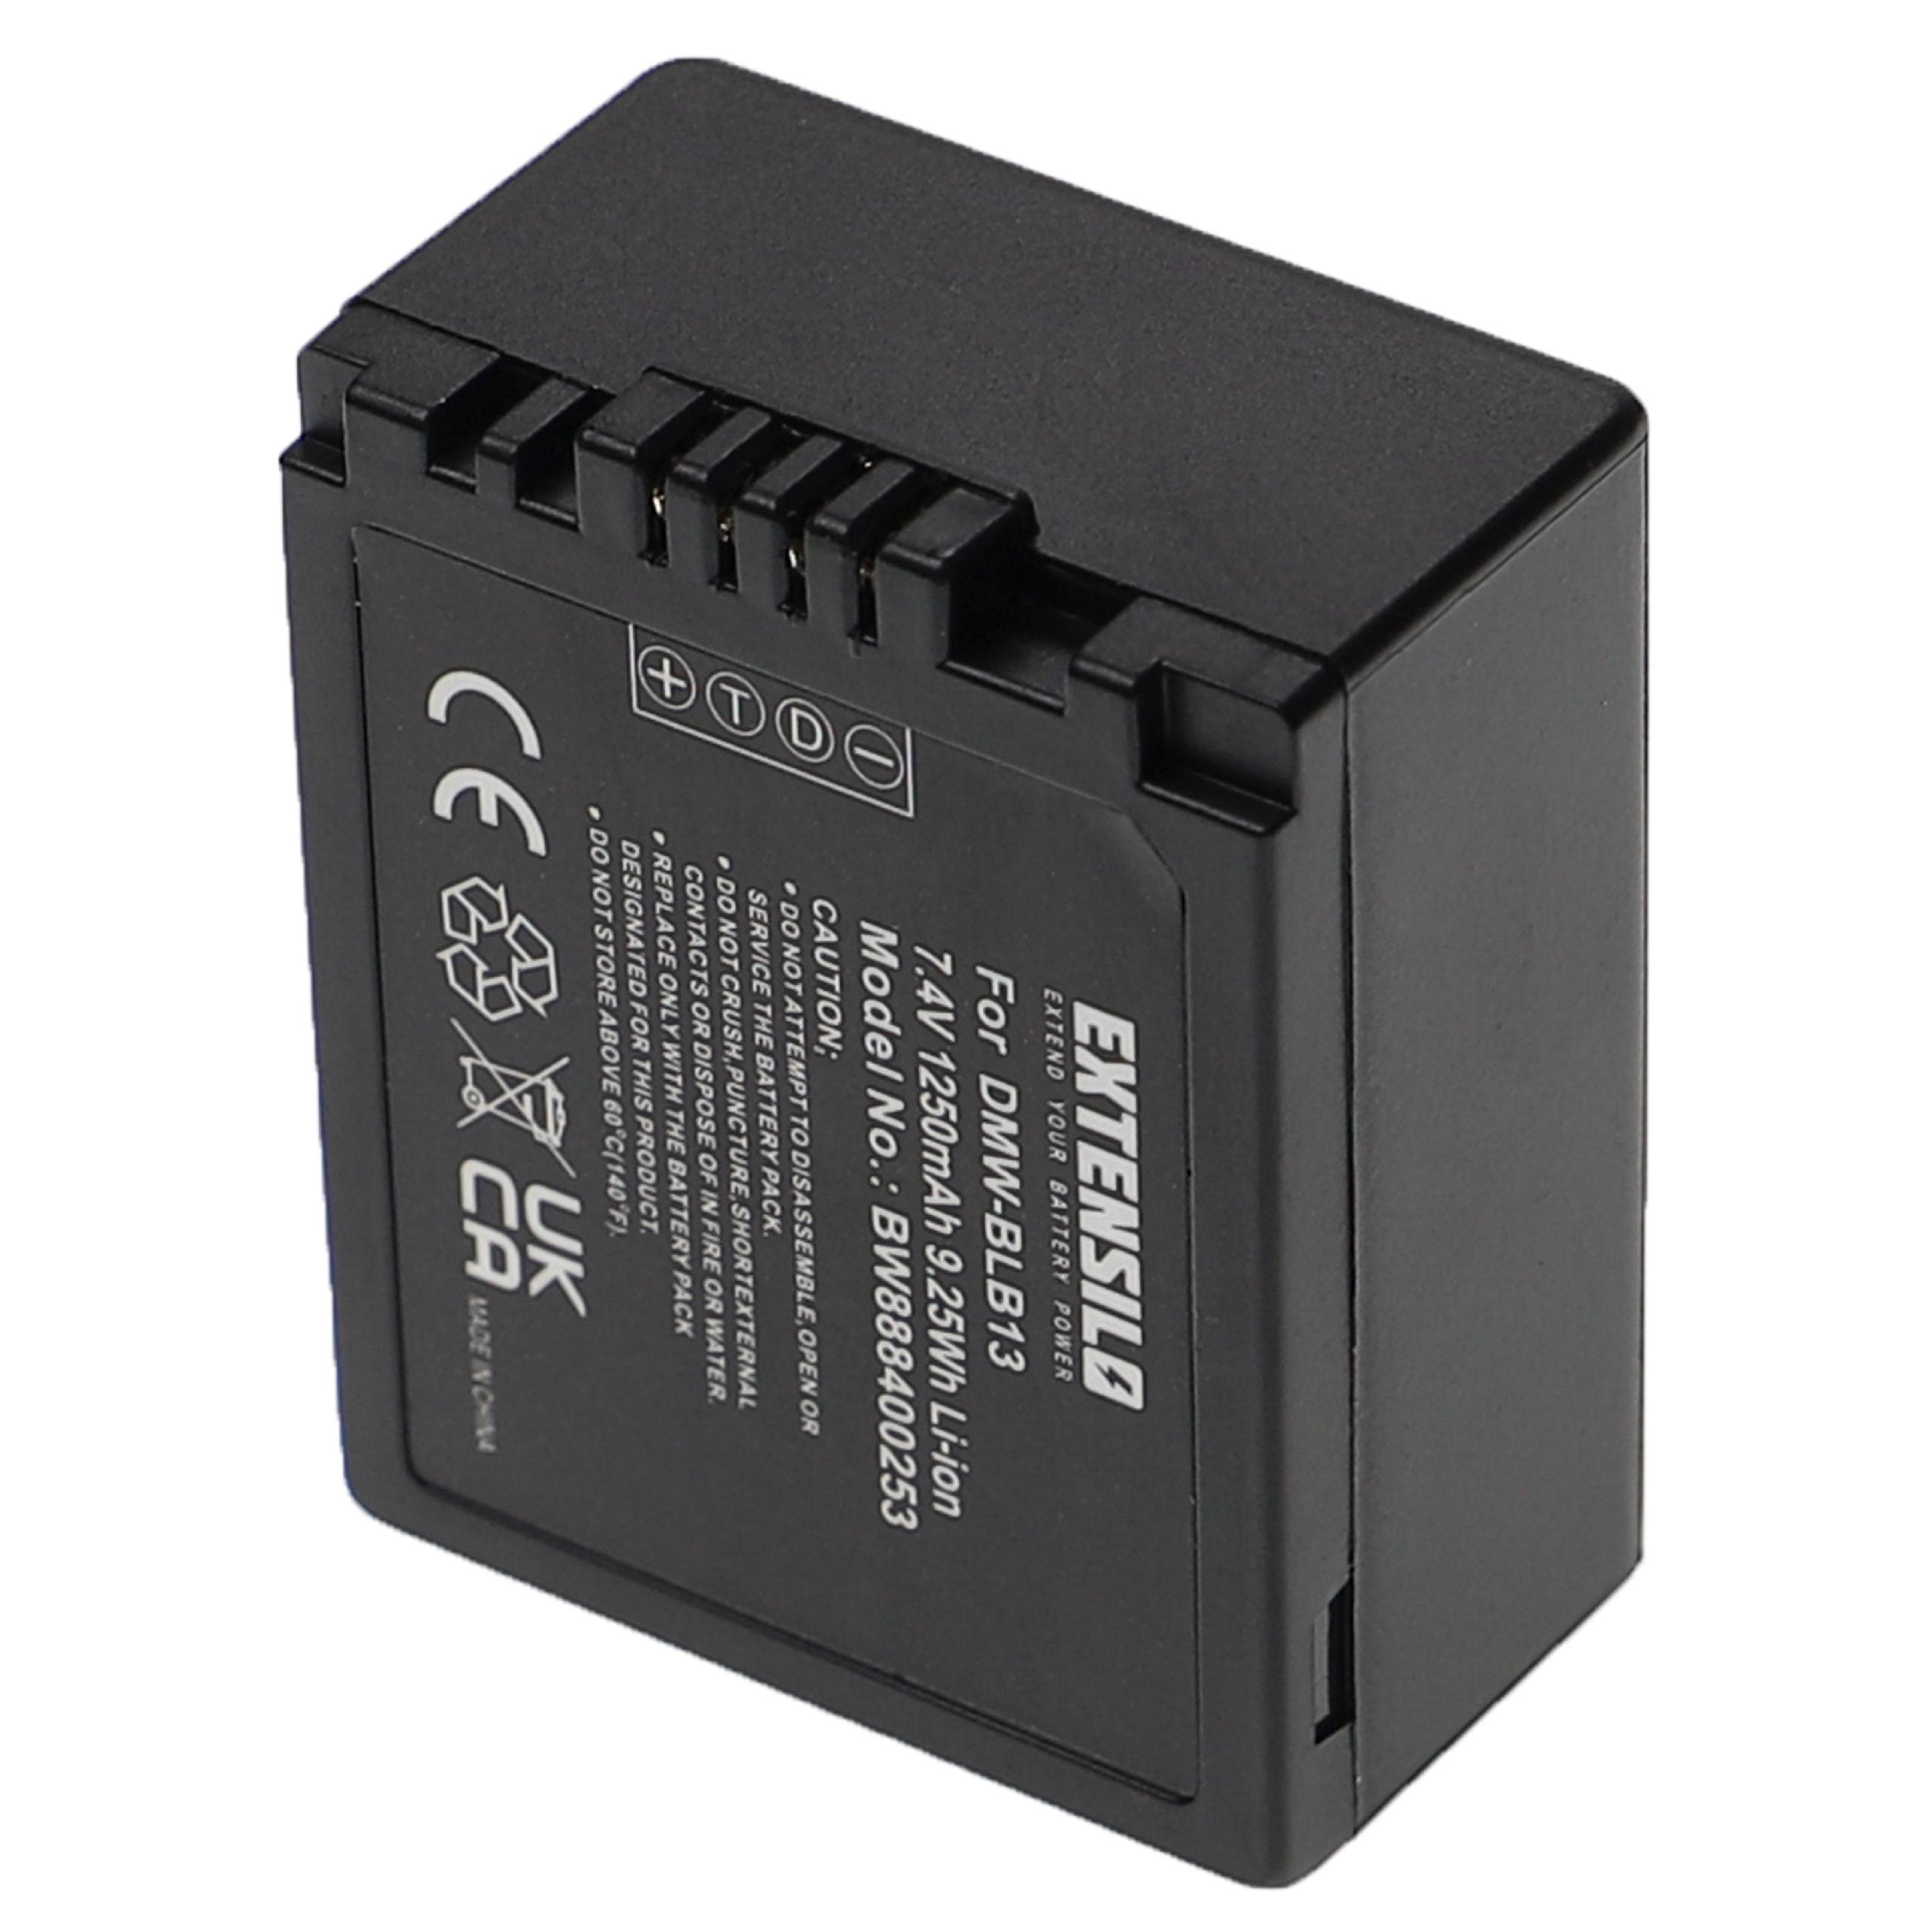 Akumulator do aparatu cyfrowego zamiennik Panasonic DMW-BLB13, DMW-BLB13E, DMW-BLB13GK - 1250 mAh 7,4 V Li-Ion